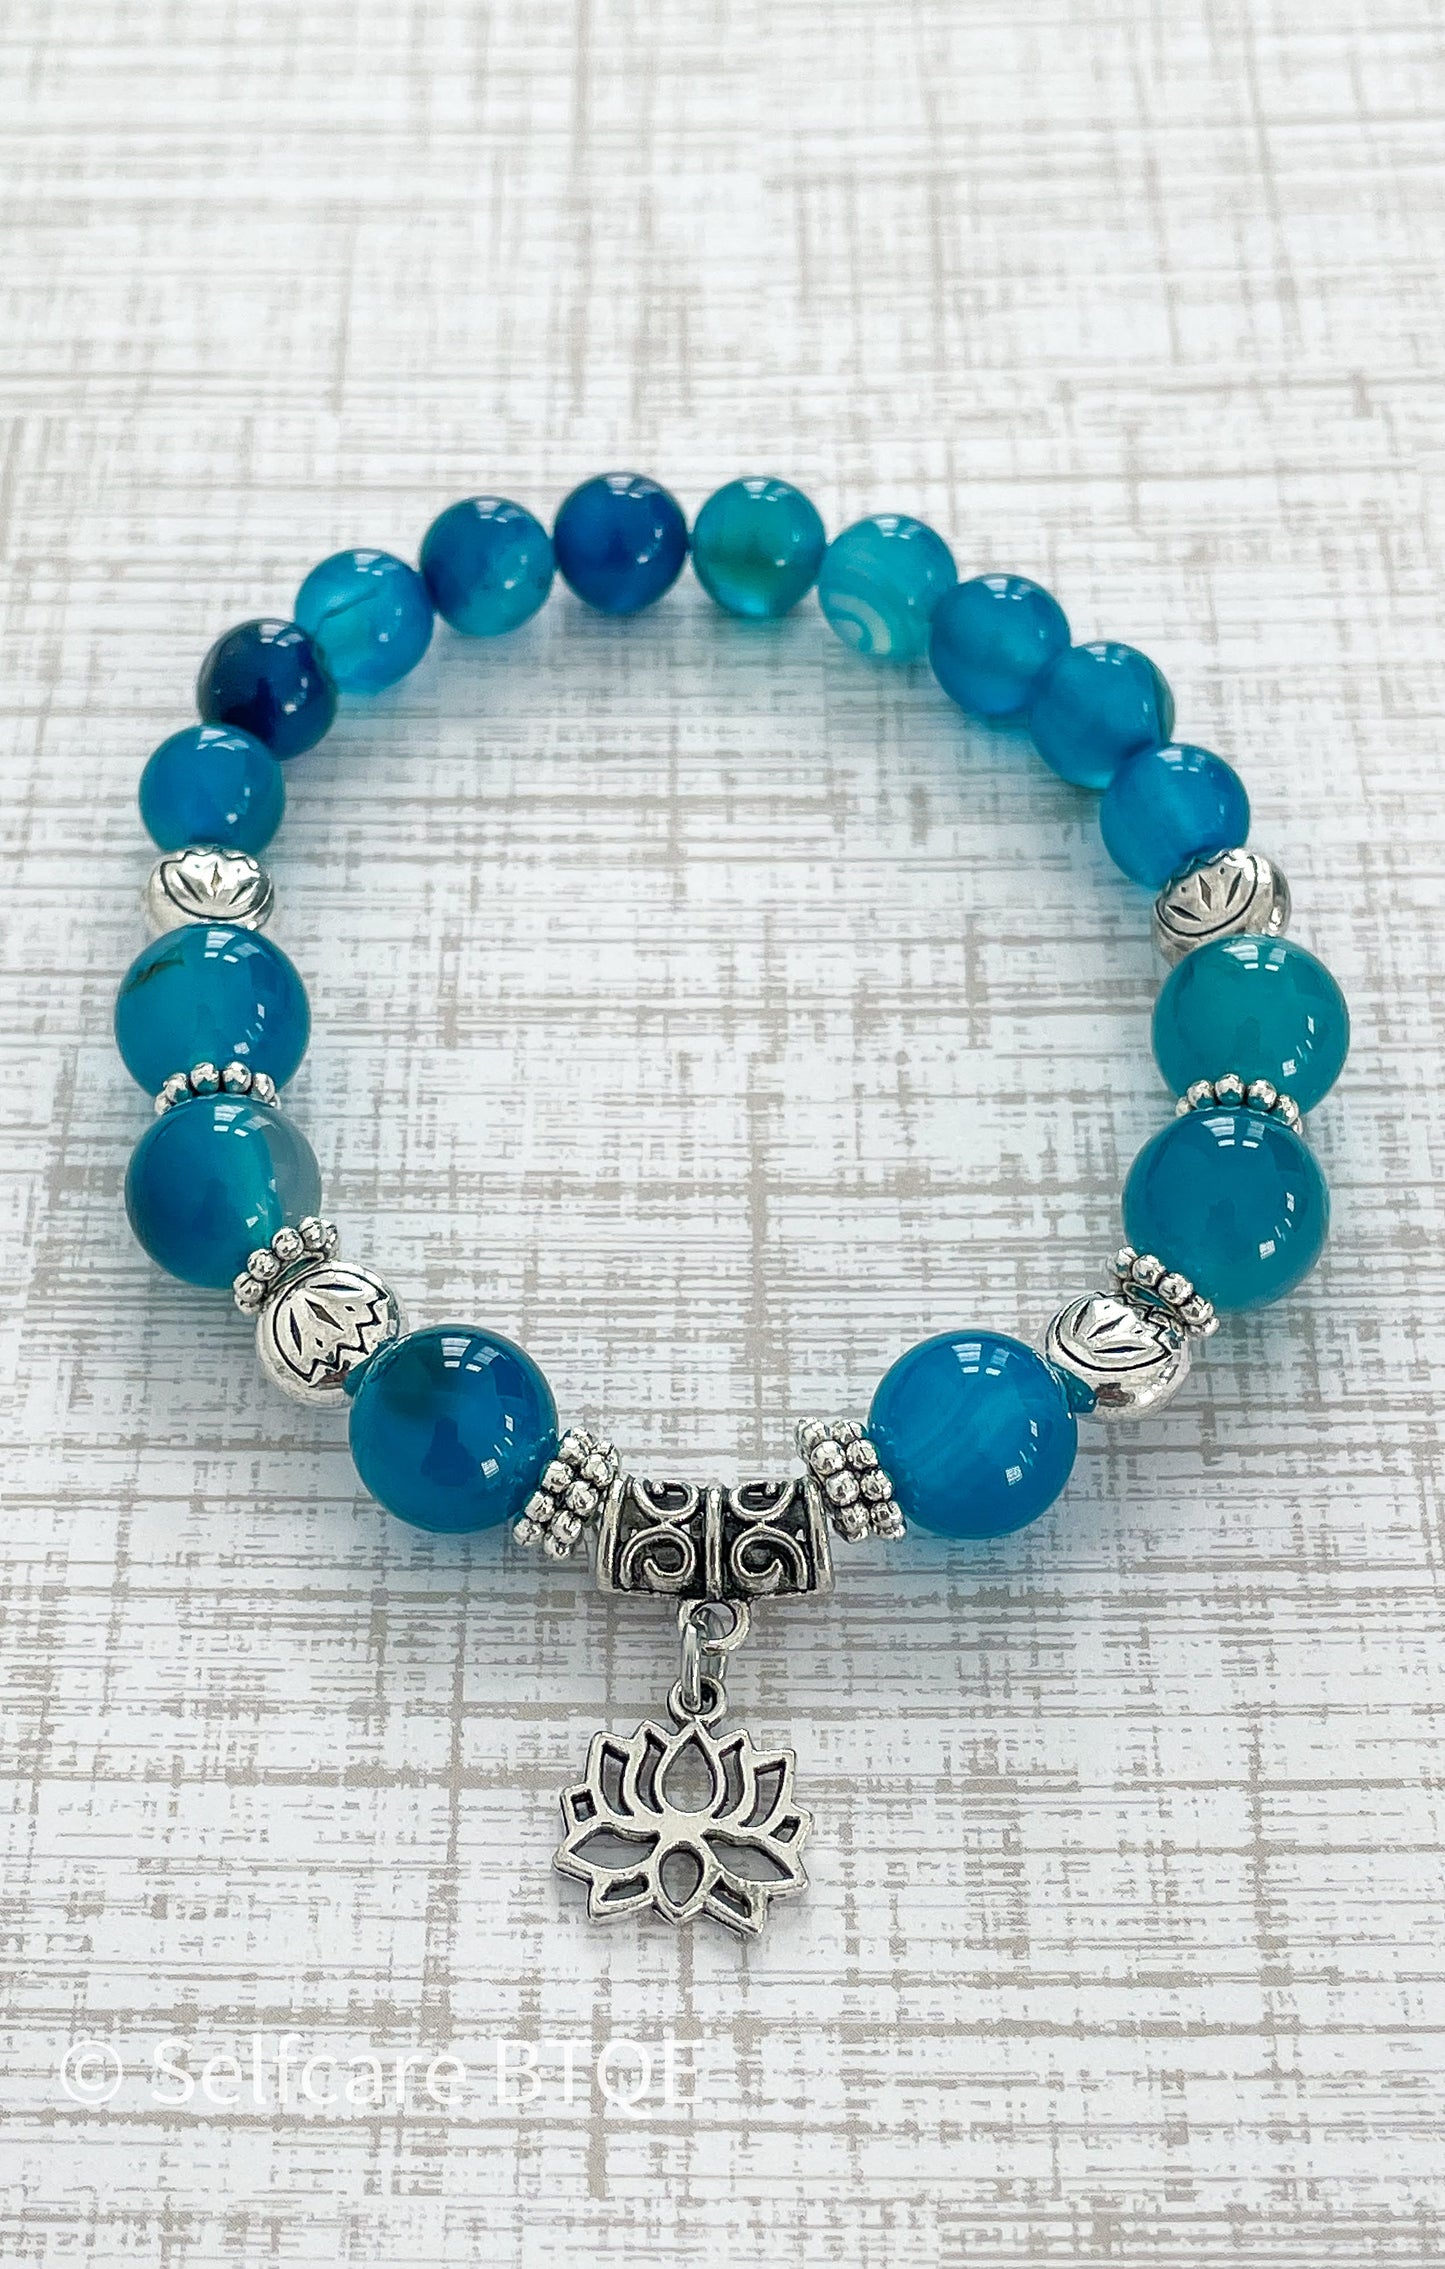 Lotus Flower with Blue Agate Stones Bracelet